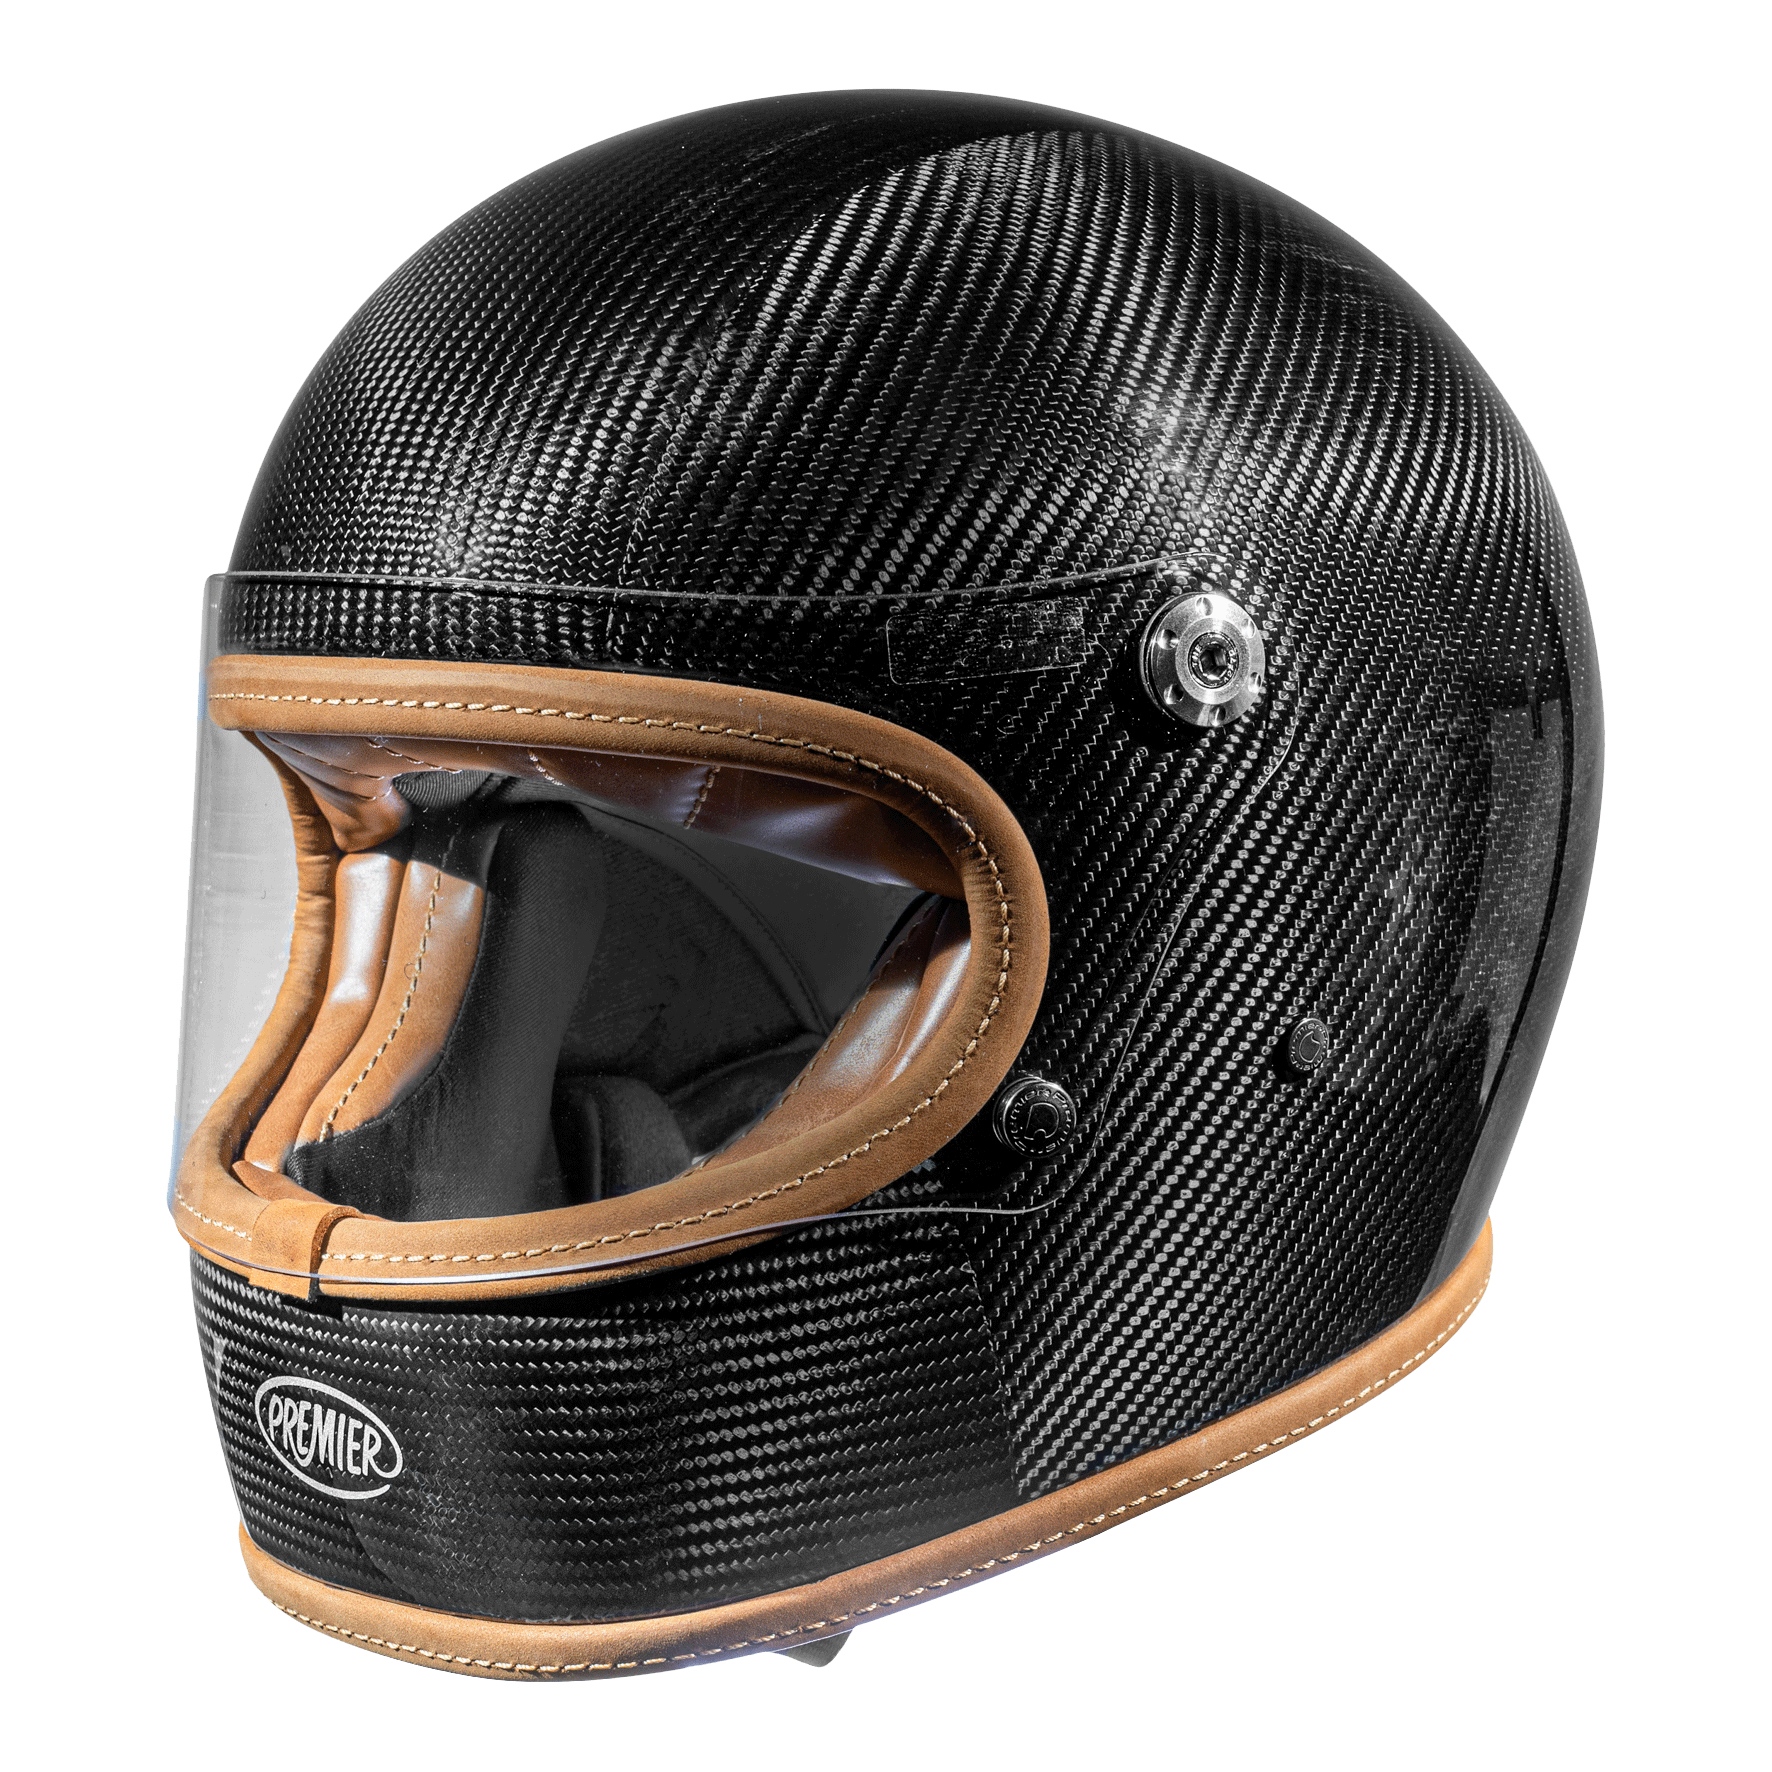 Image of Premier Trophy Platinum Ed Carbon Full Face Helmet Size S ID 8051739972092